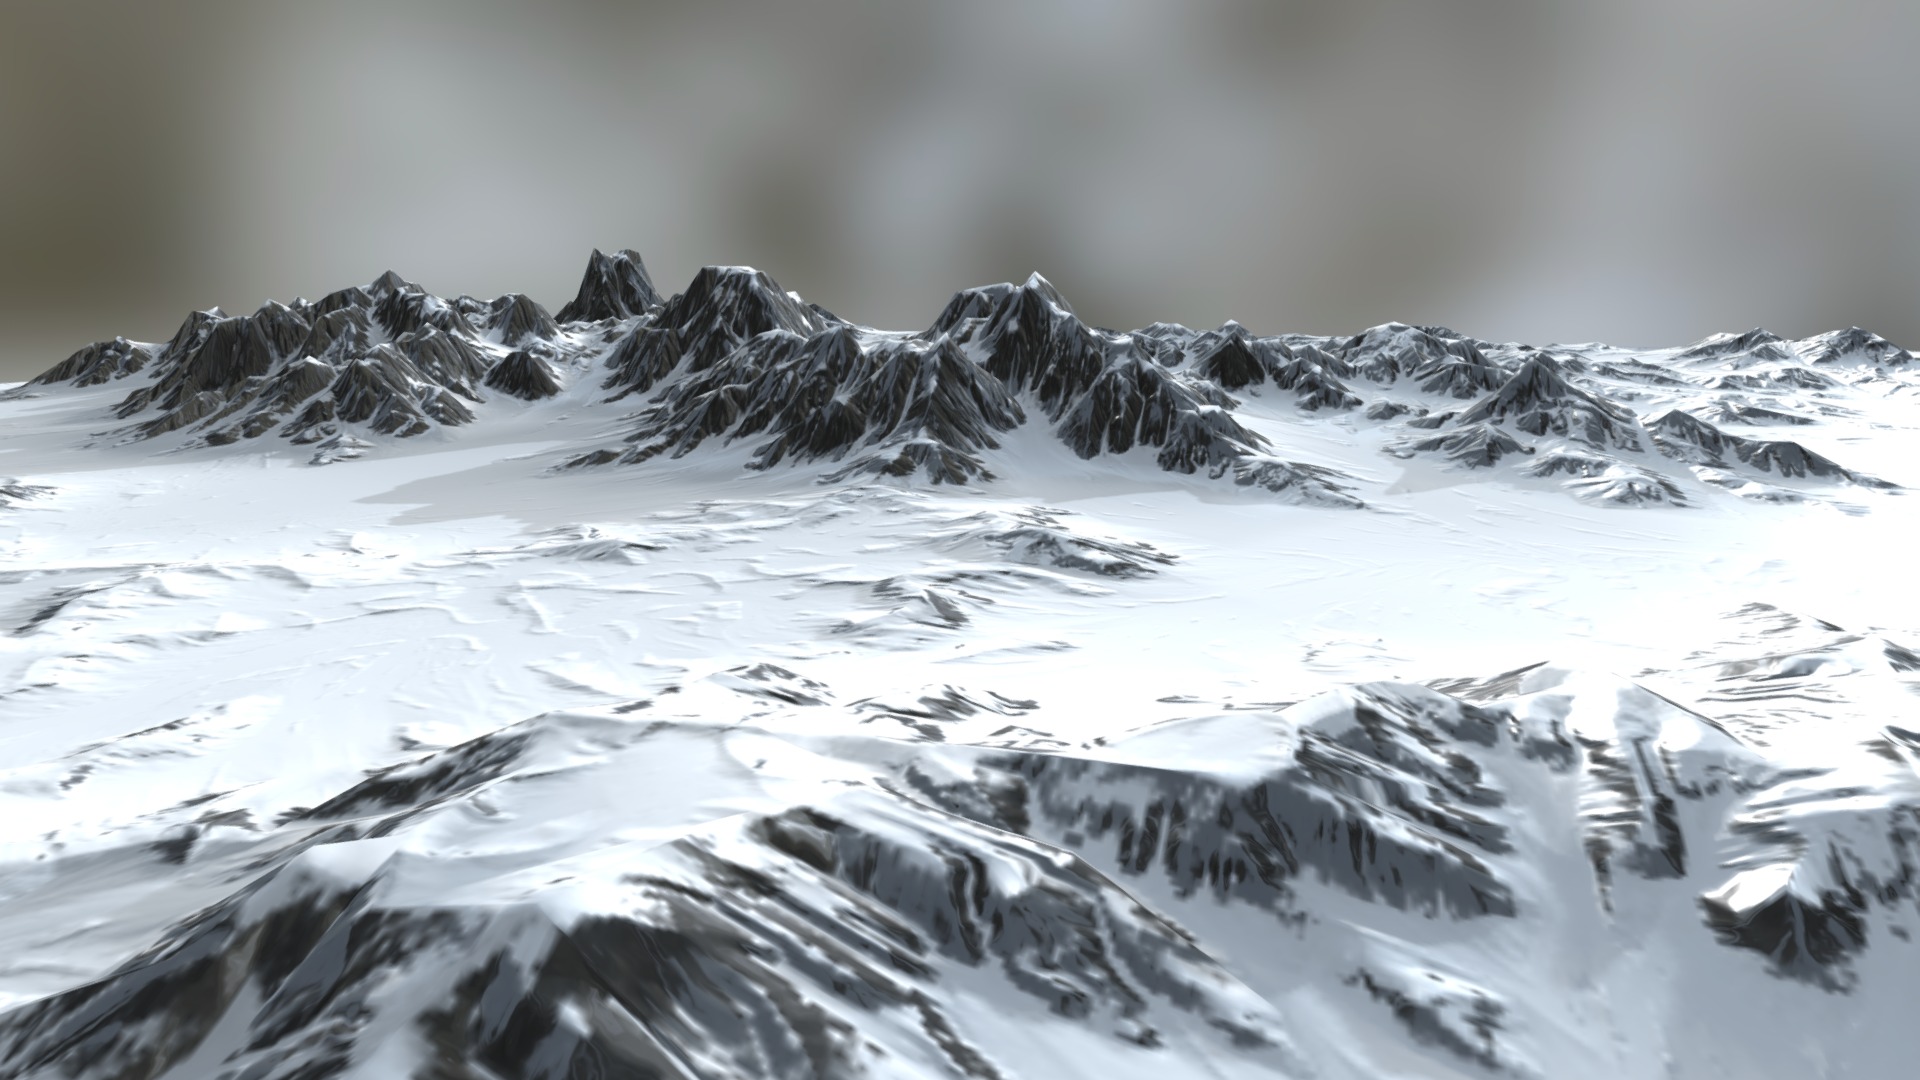 3D model Terrain alpine - This is a 3D model of the Terrain alpine. The 3D model is about a snowy mountain range.